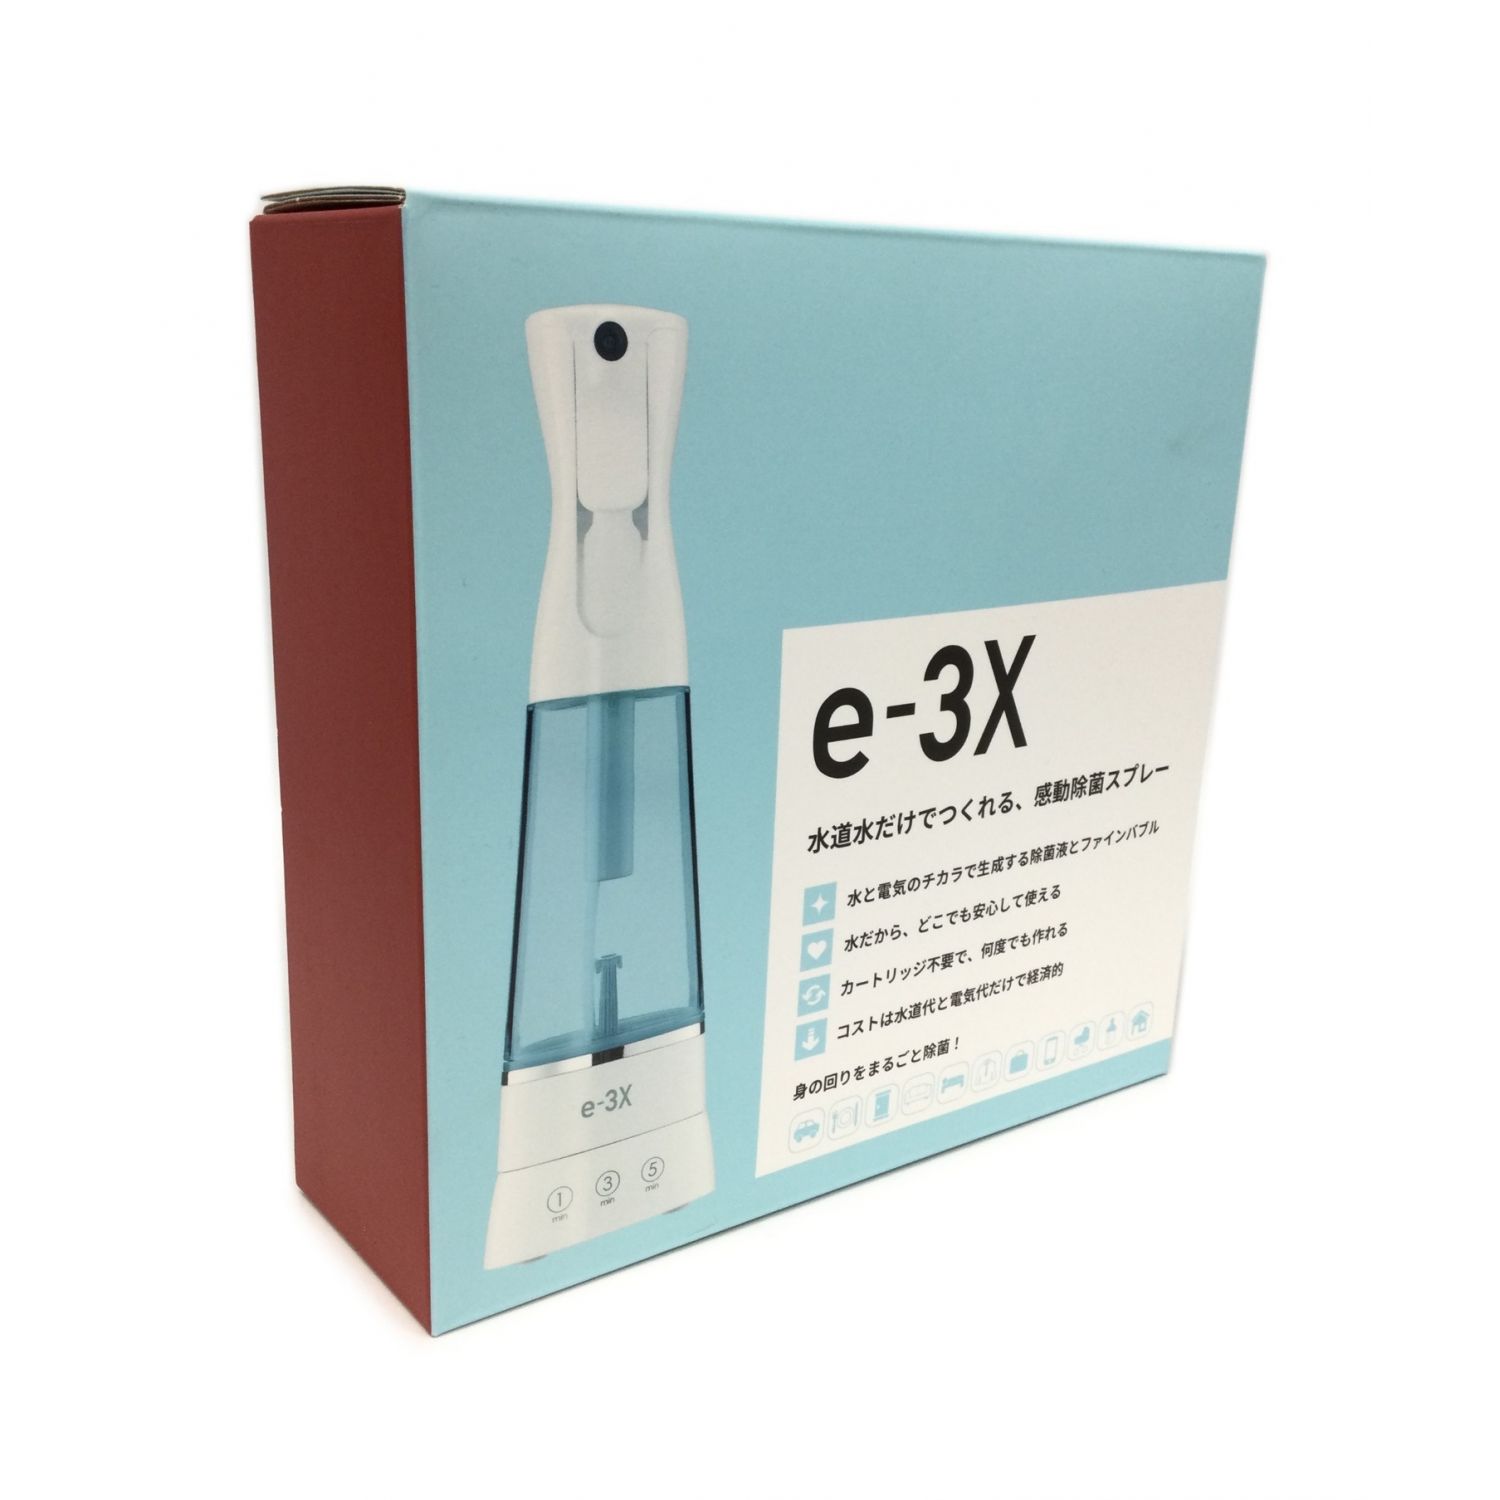 LIFE e-3X 水道水だけでつくれる、感動除菌スプレー - 除菌・消臭